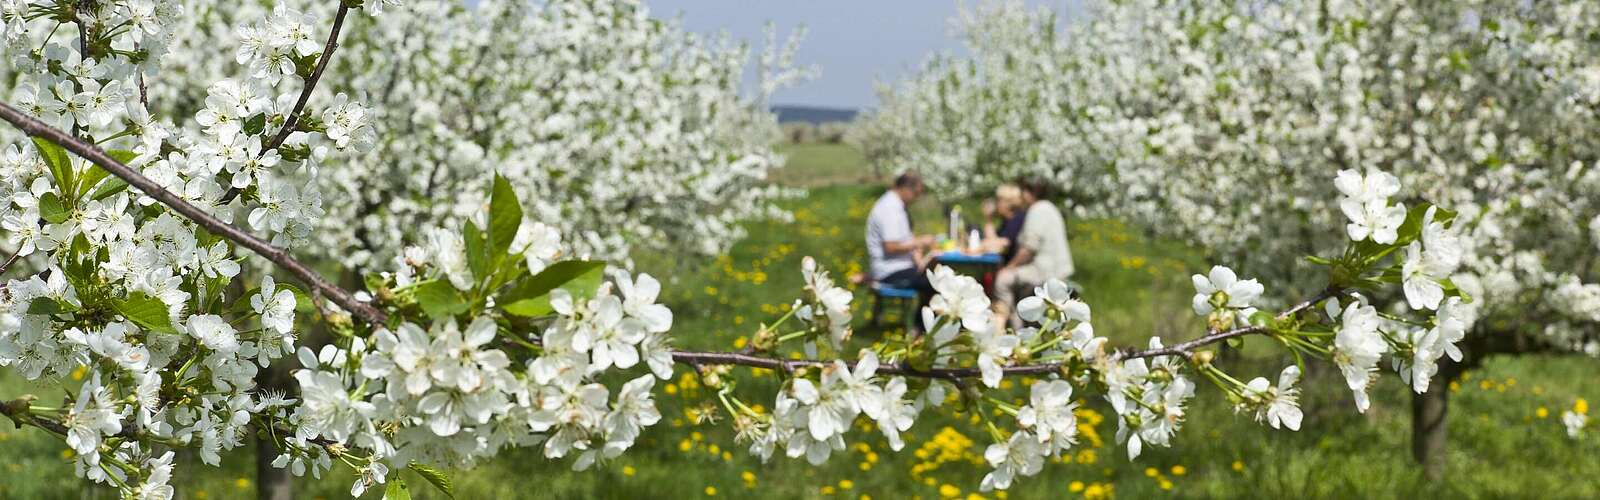 Baumblütenfest unter den Obstbäumen,
        
    

        Foto: TMB-Fotoarchiv/Steffen Lehmann